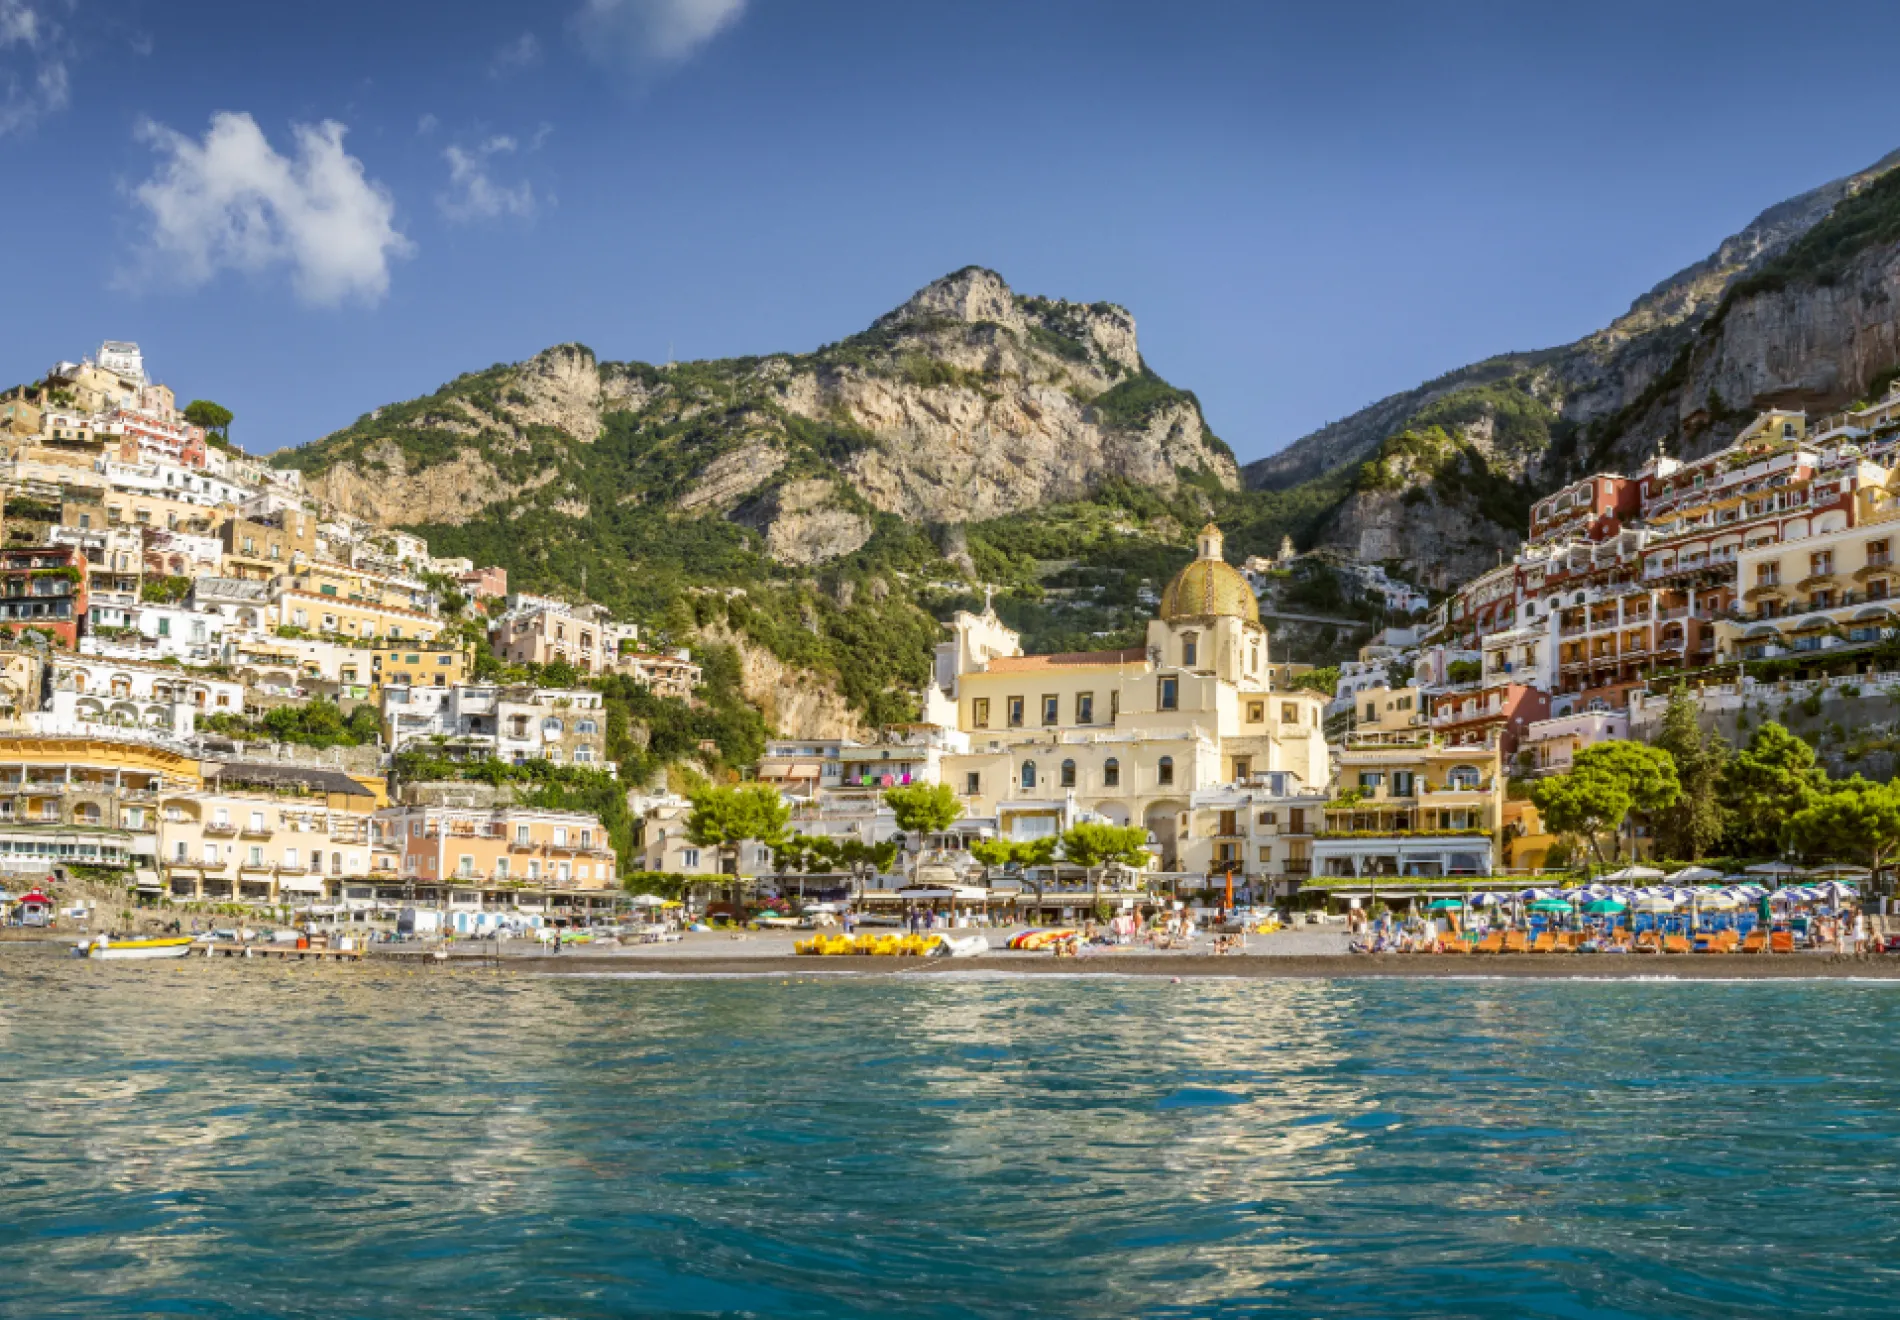 Positano town Amalfi coast Italy